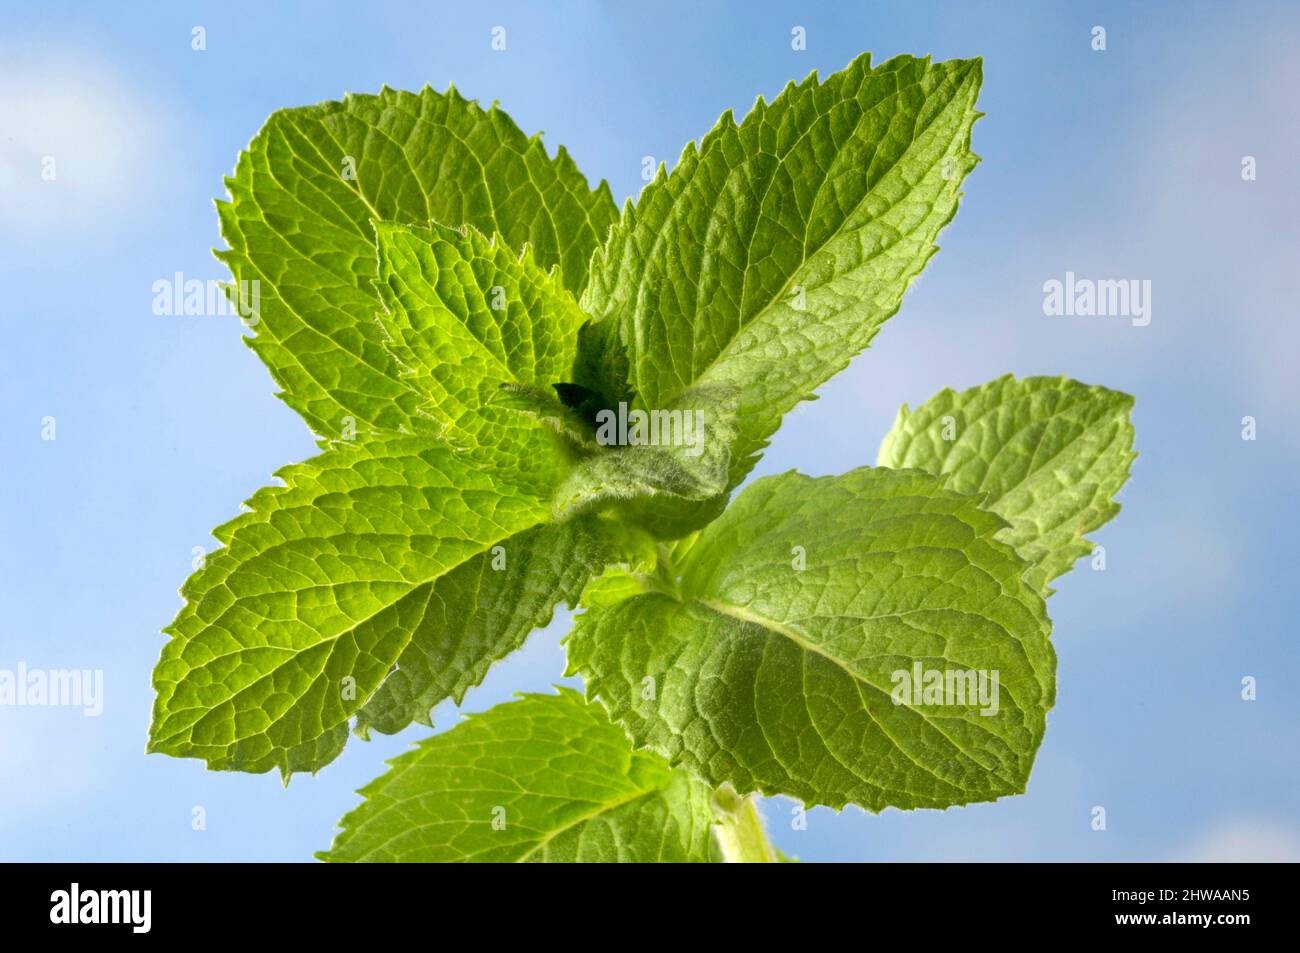 apple mint, pineapple mint, woolly mint, round-leafed mint (Mentha suaveolens, Mentha x rotundifolia), cultivar Bowles against blue sky Stock Photo